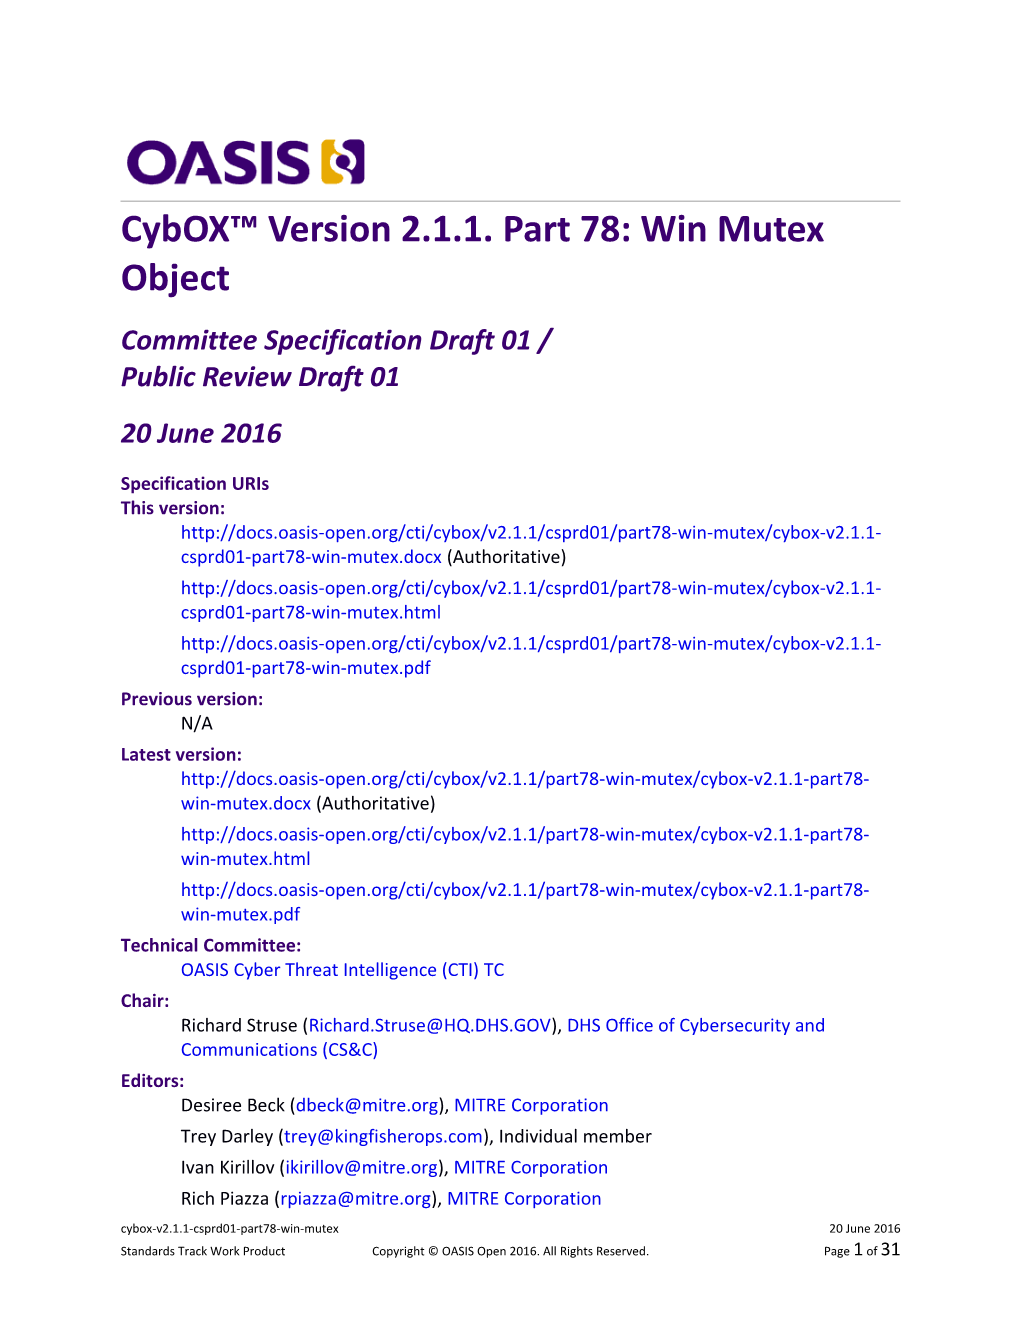 Cybox Version 2.1.1. Part 78: Win Mutex Object